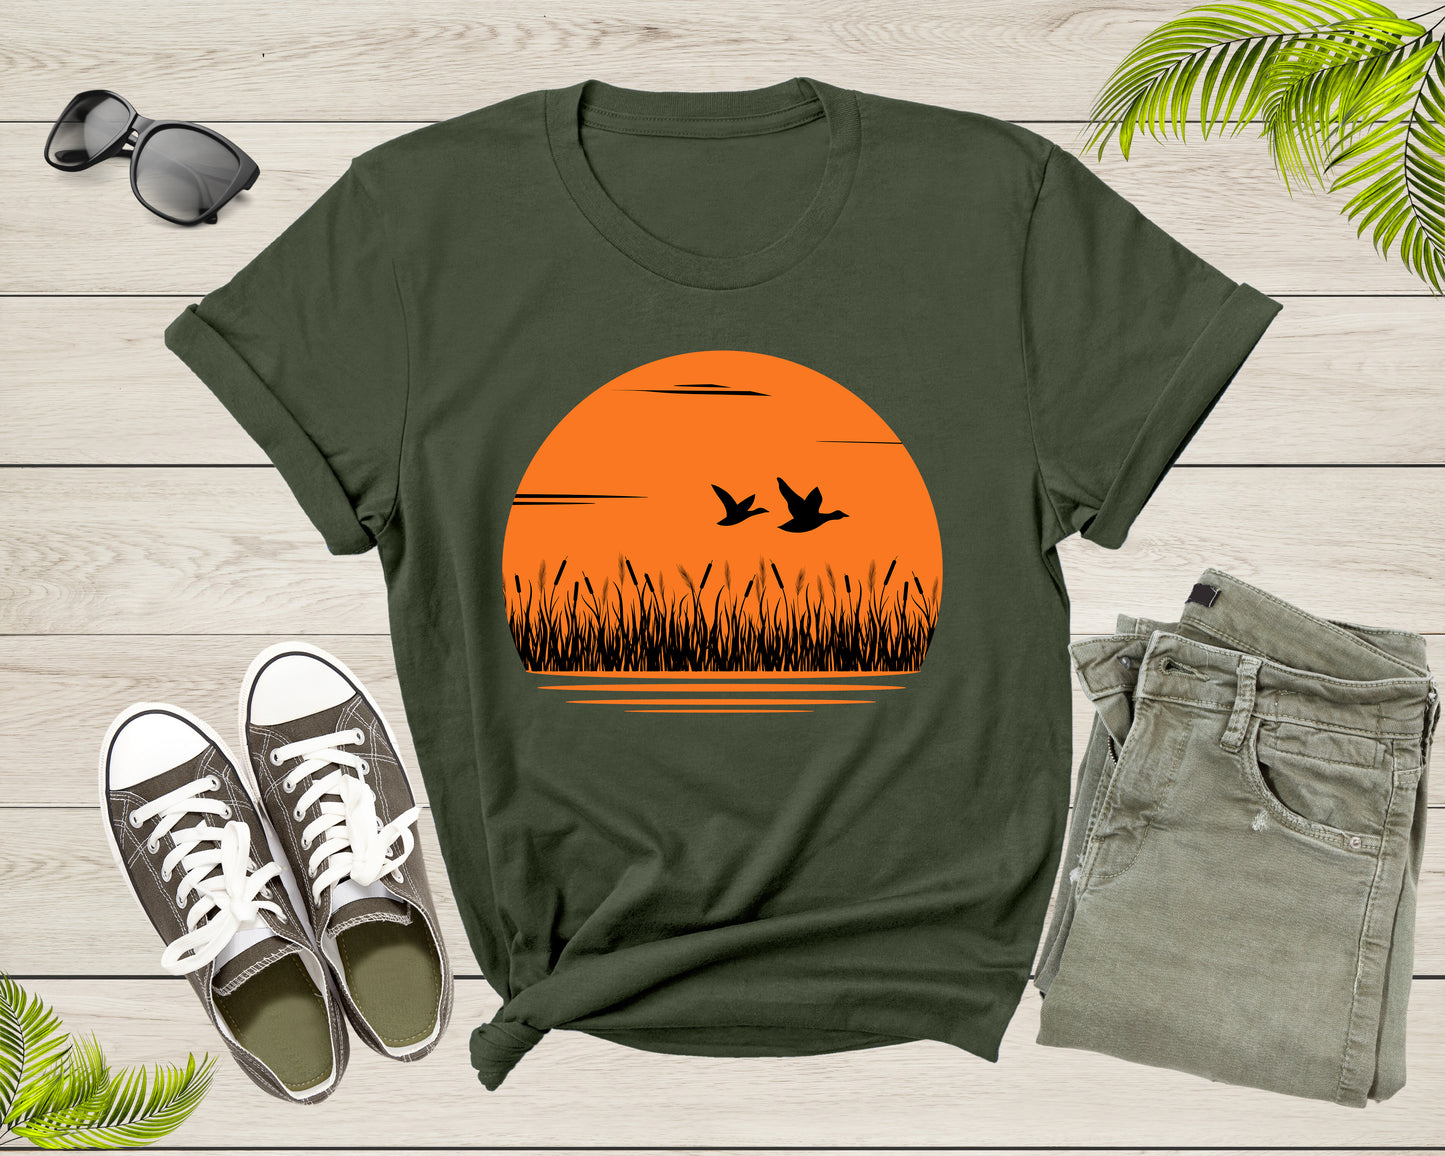 Ducks Flying at Sunset Over Sea Beautiful Animal Bird Nature T-Shirt Duck Hunt Lover Gift T Shirt for Men Women Kids Boys Girls Tshirt